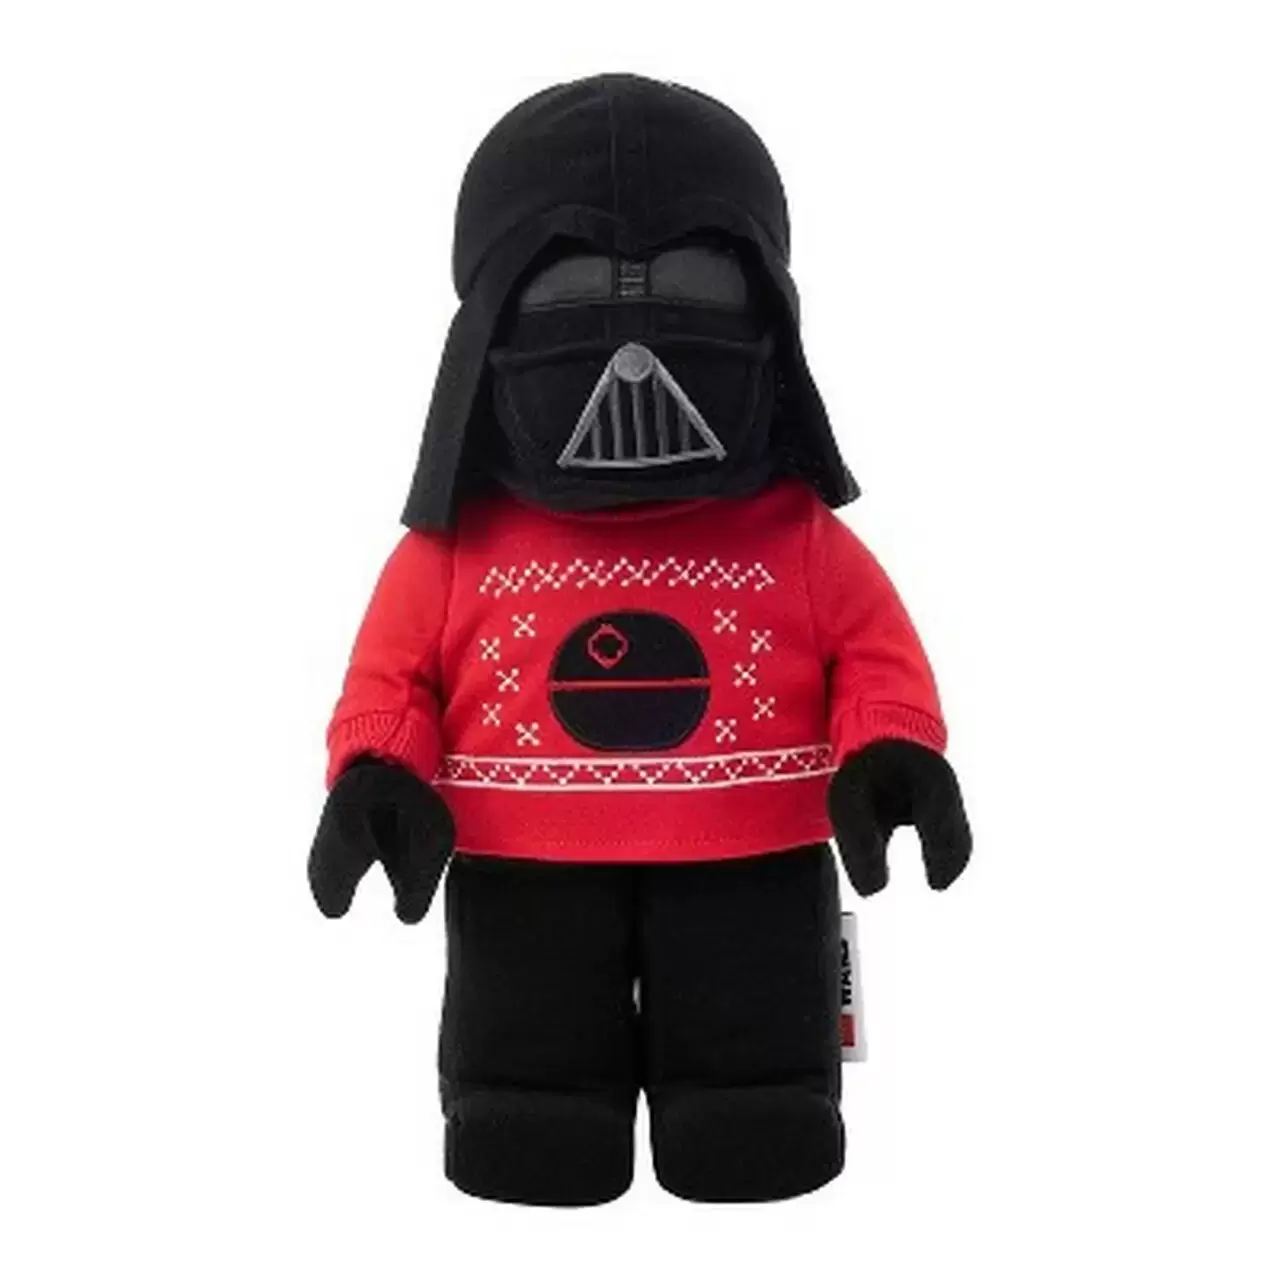 Lego Plush - Christmas Darth Vader